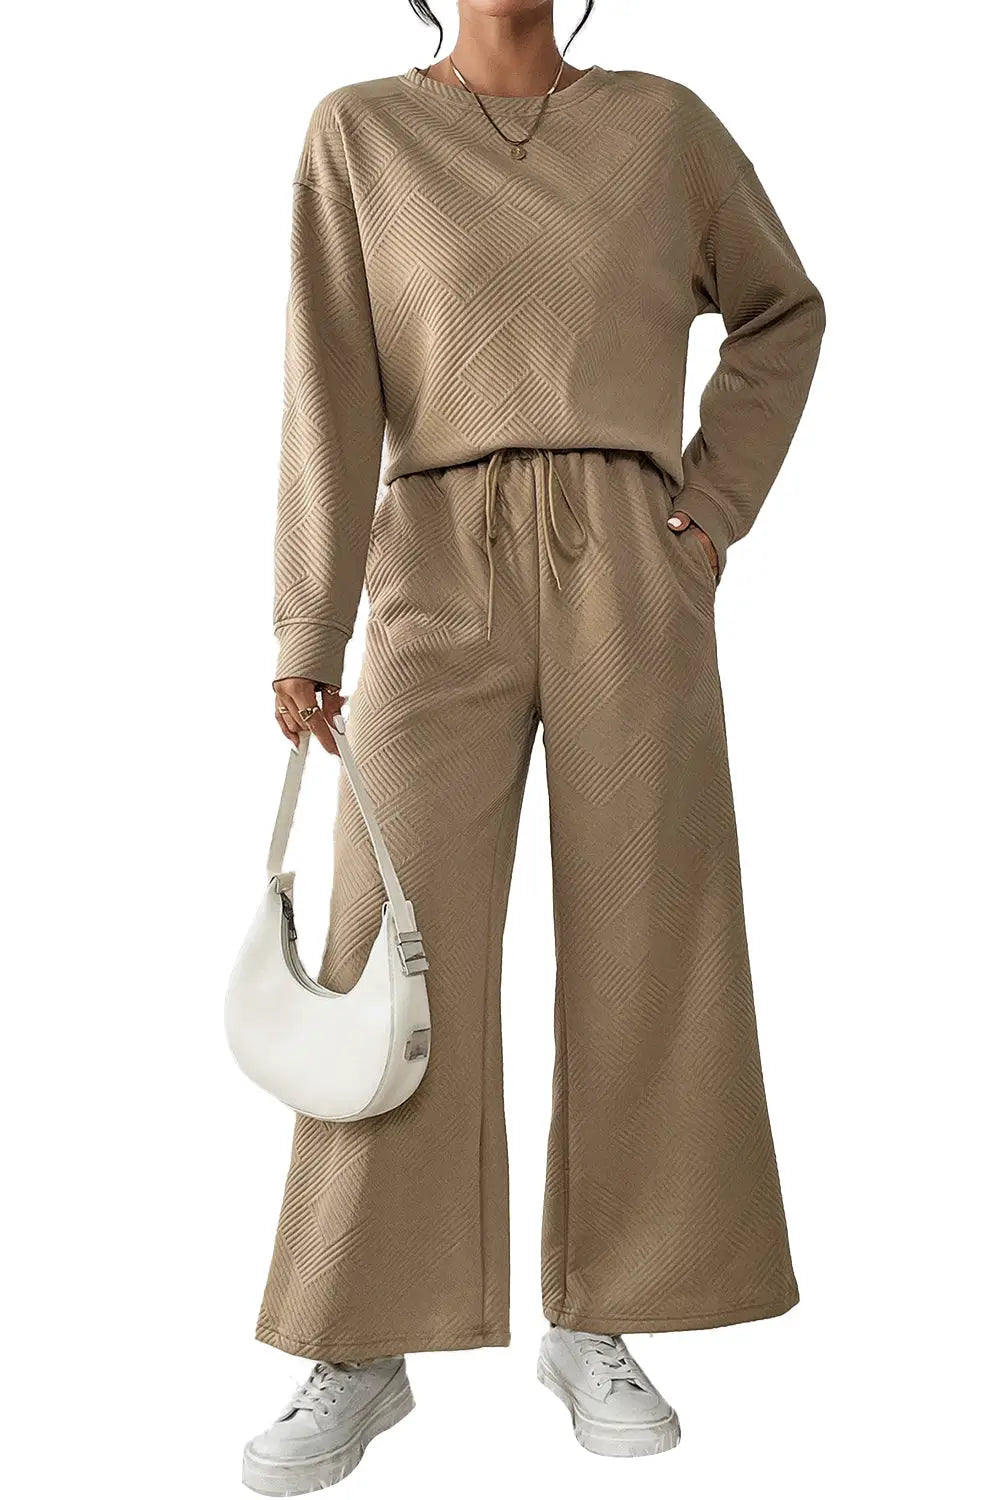 Khaki ultra loose textured 2pcs slouchy outfit - pants sets